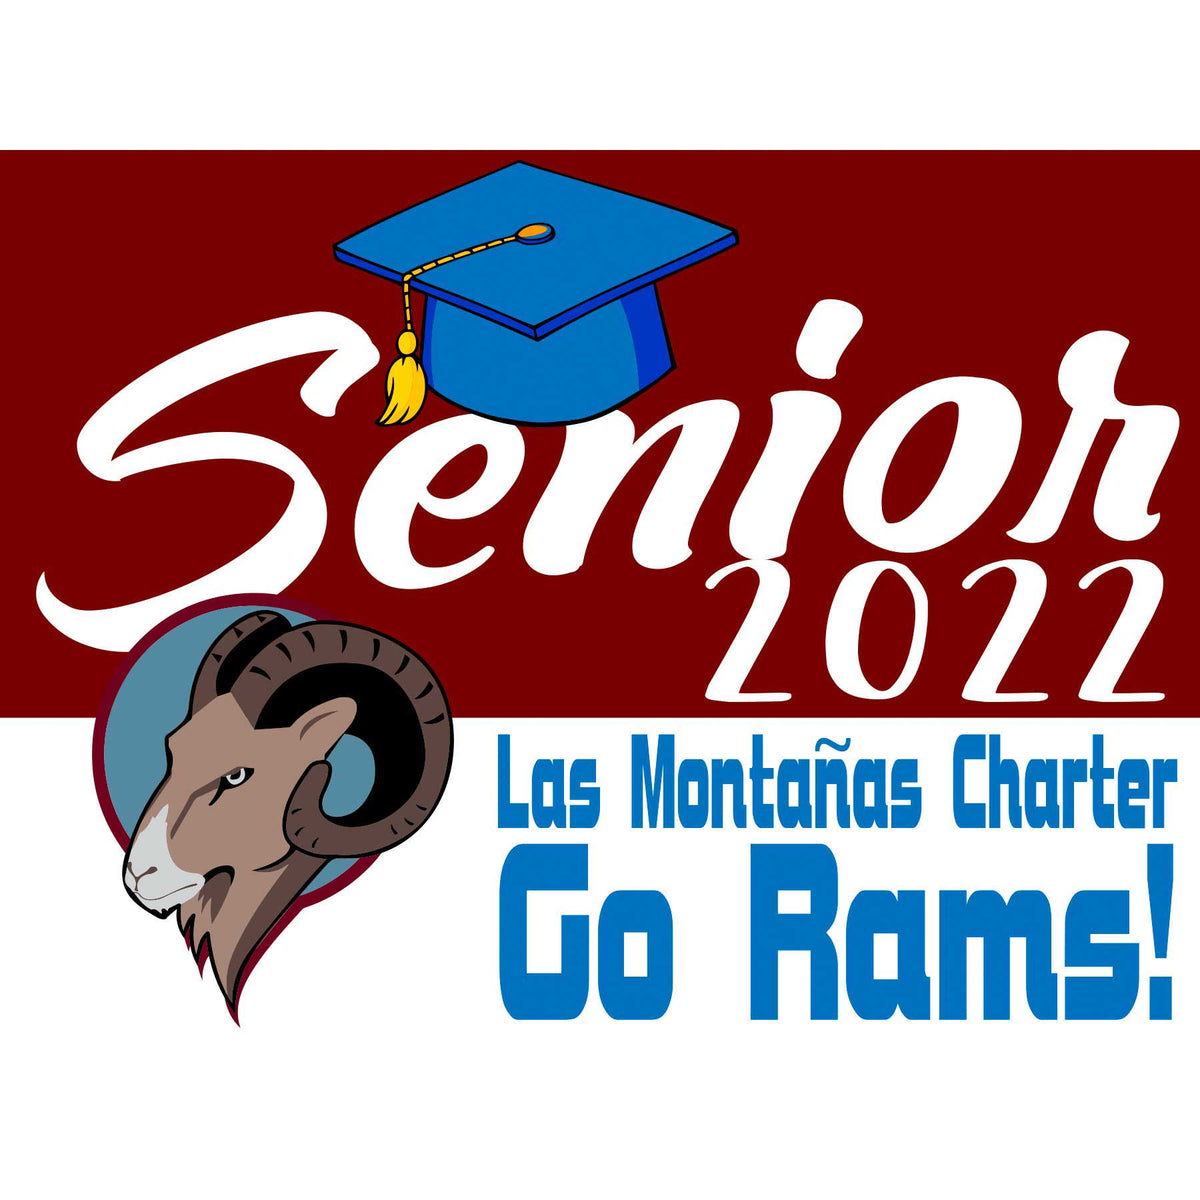 Las Montanas Charter High School Senior Yard Sign